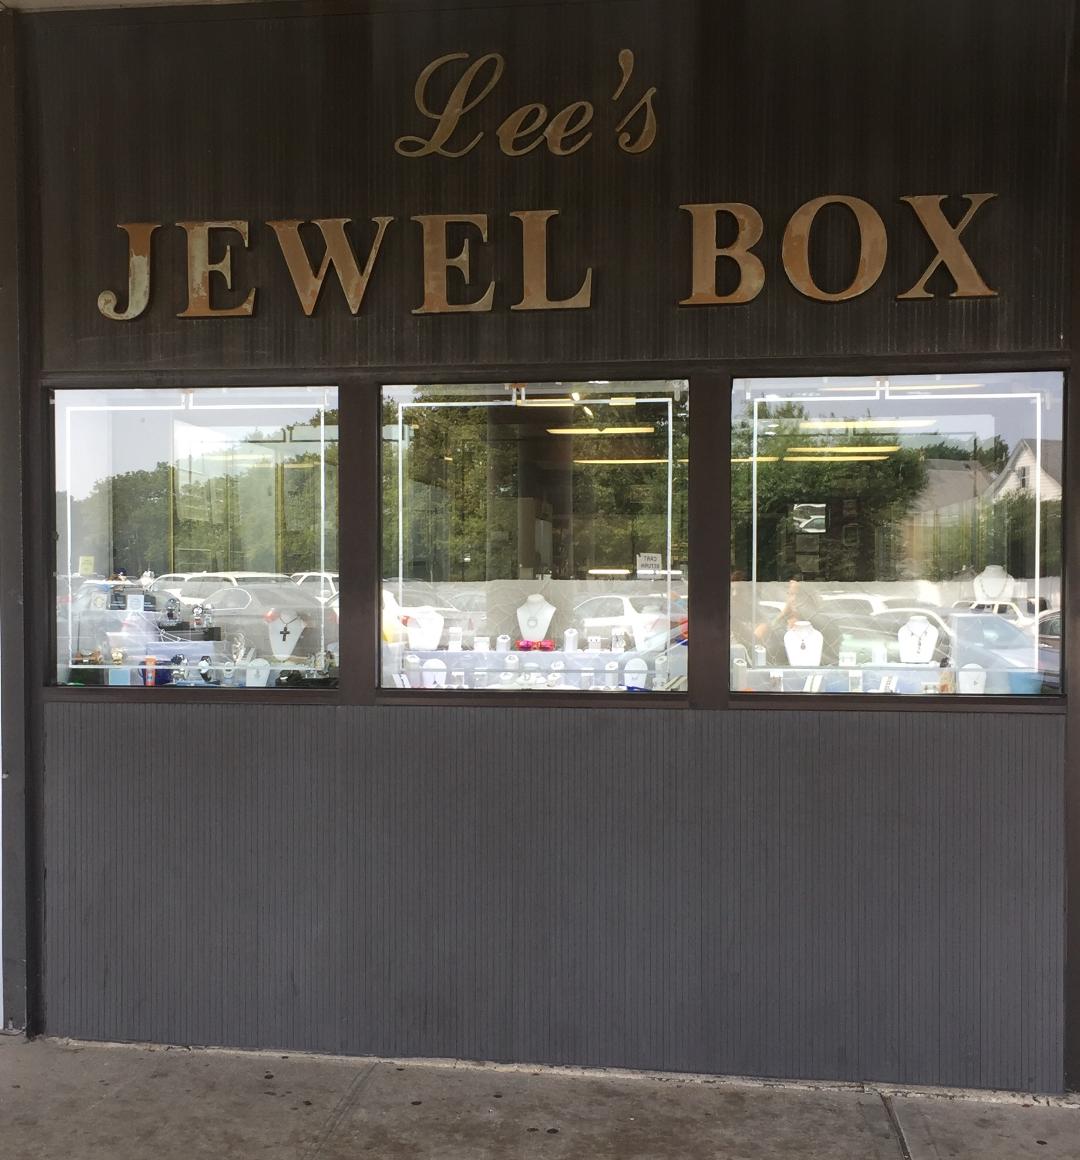 Lee's Jewel Box